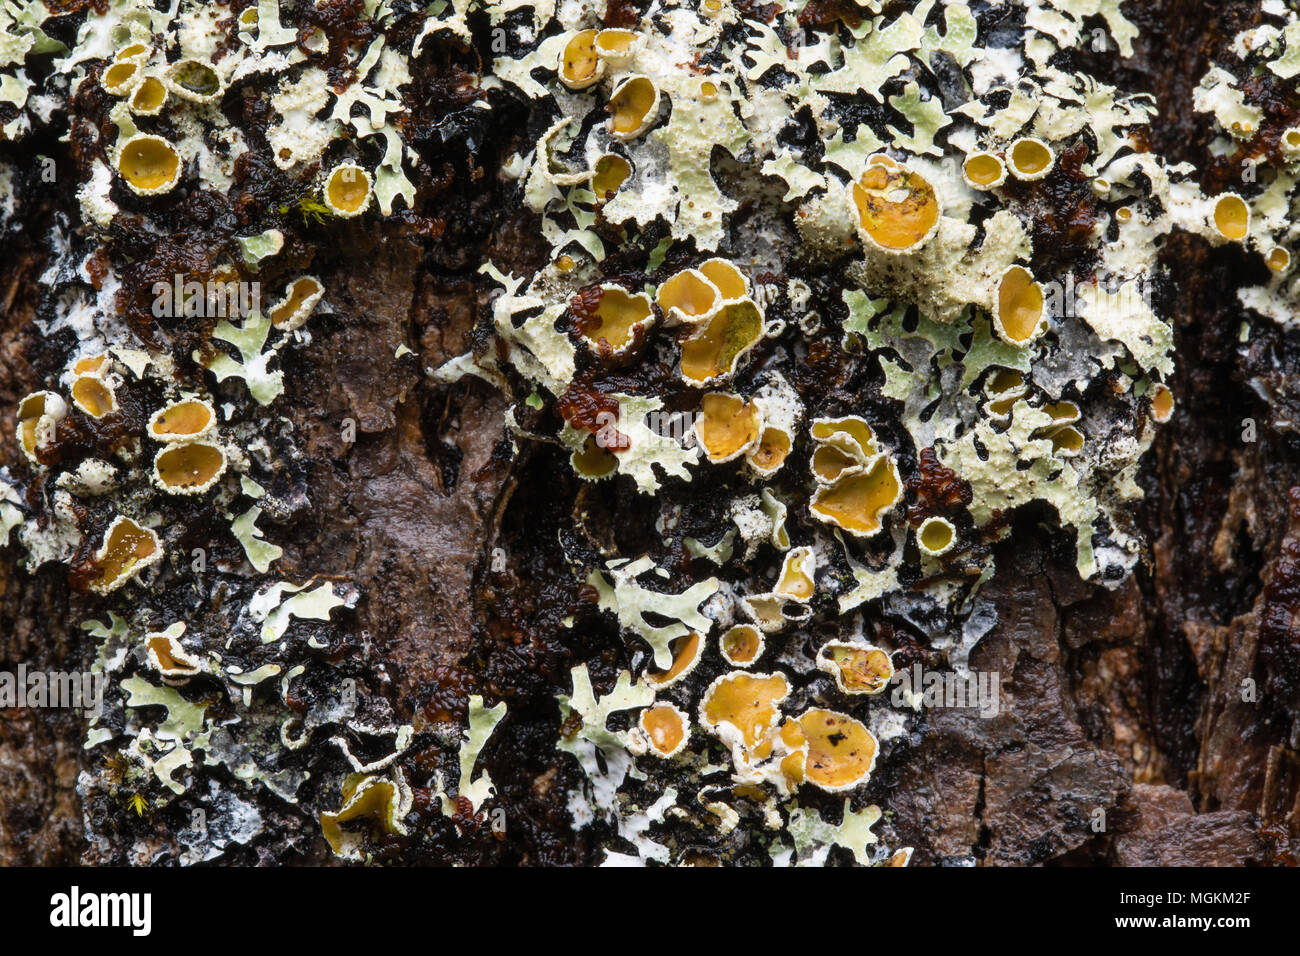 Lichen growing on the bark of a hemlock tree in Halifax, Nova Scotia, Canada. Stock Photo